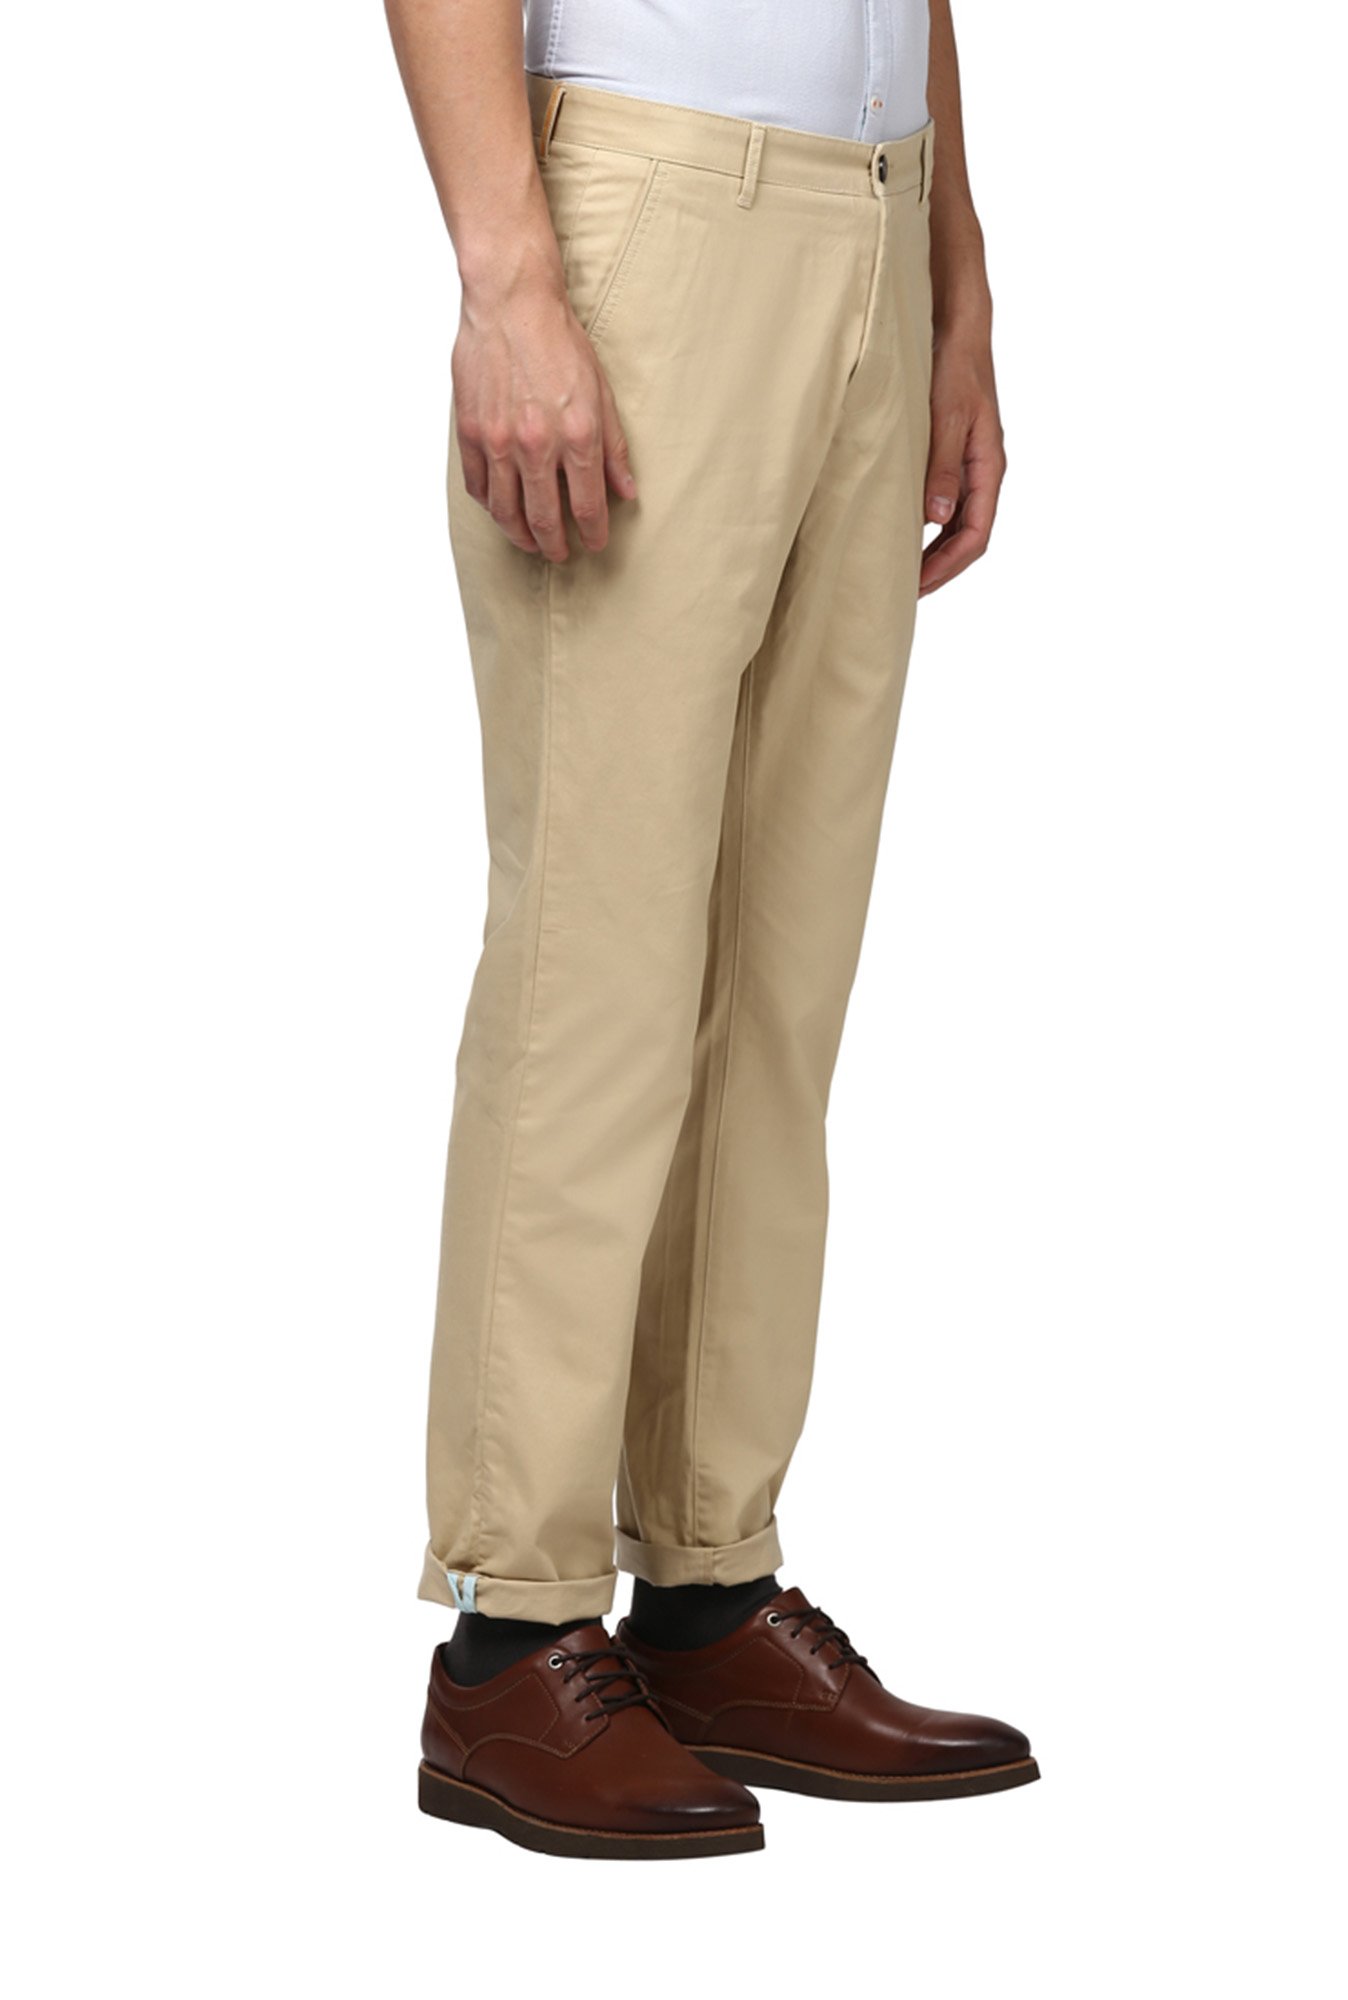 Buy Color Plus Mens Tailored Casual Pants CMTV11427N6Dark Green32 at  Amazonin